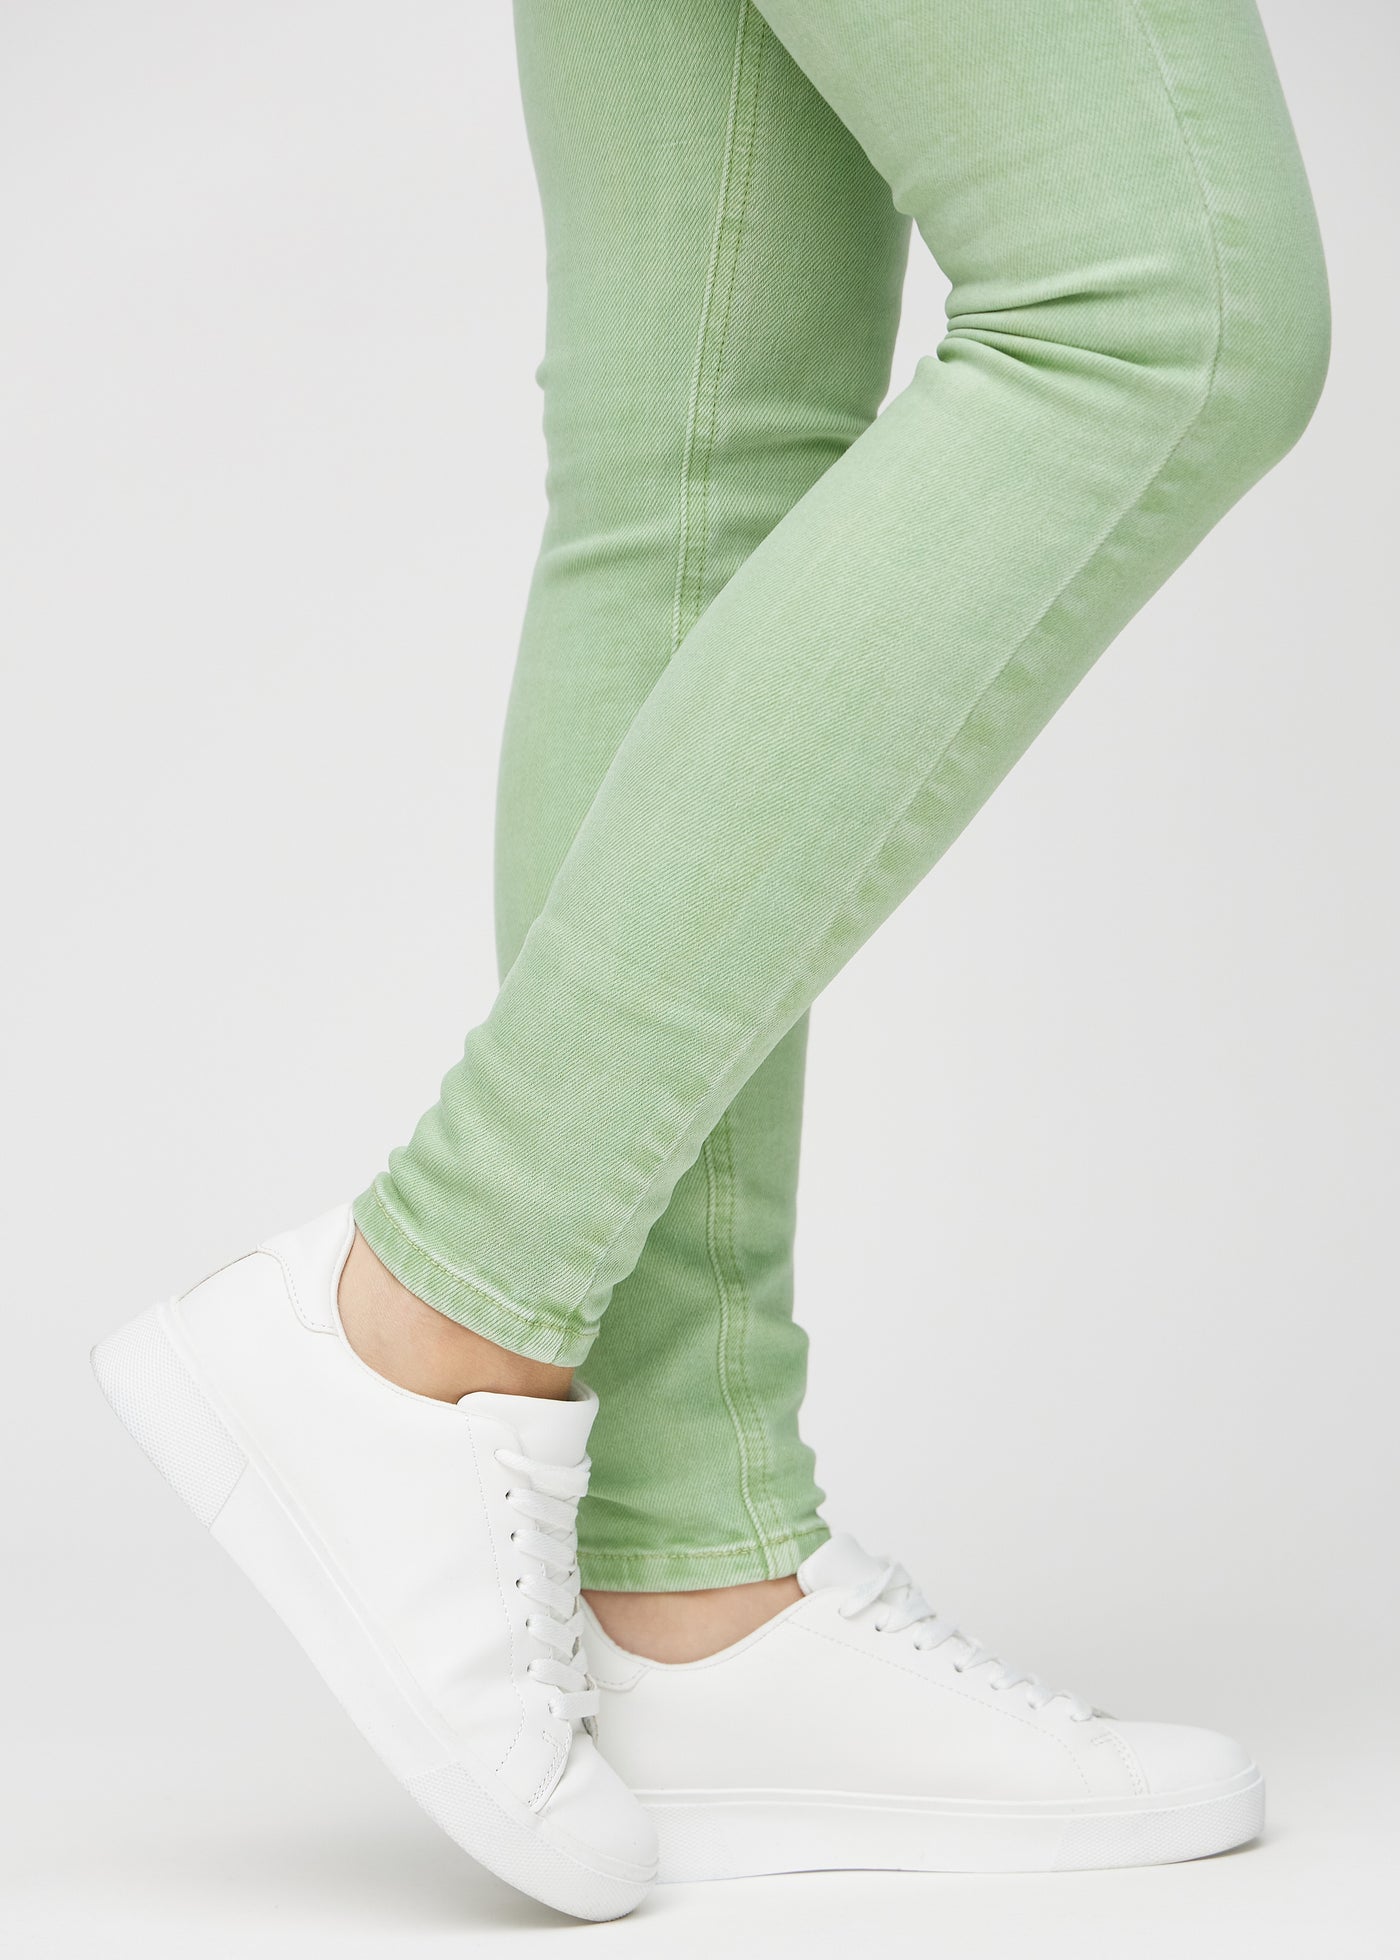 Perfect Jeans - Skinny - Mints™